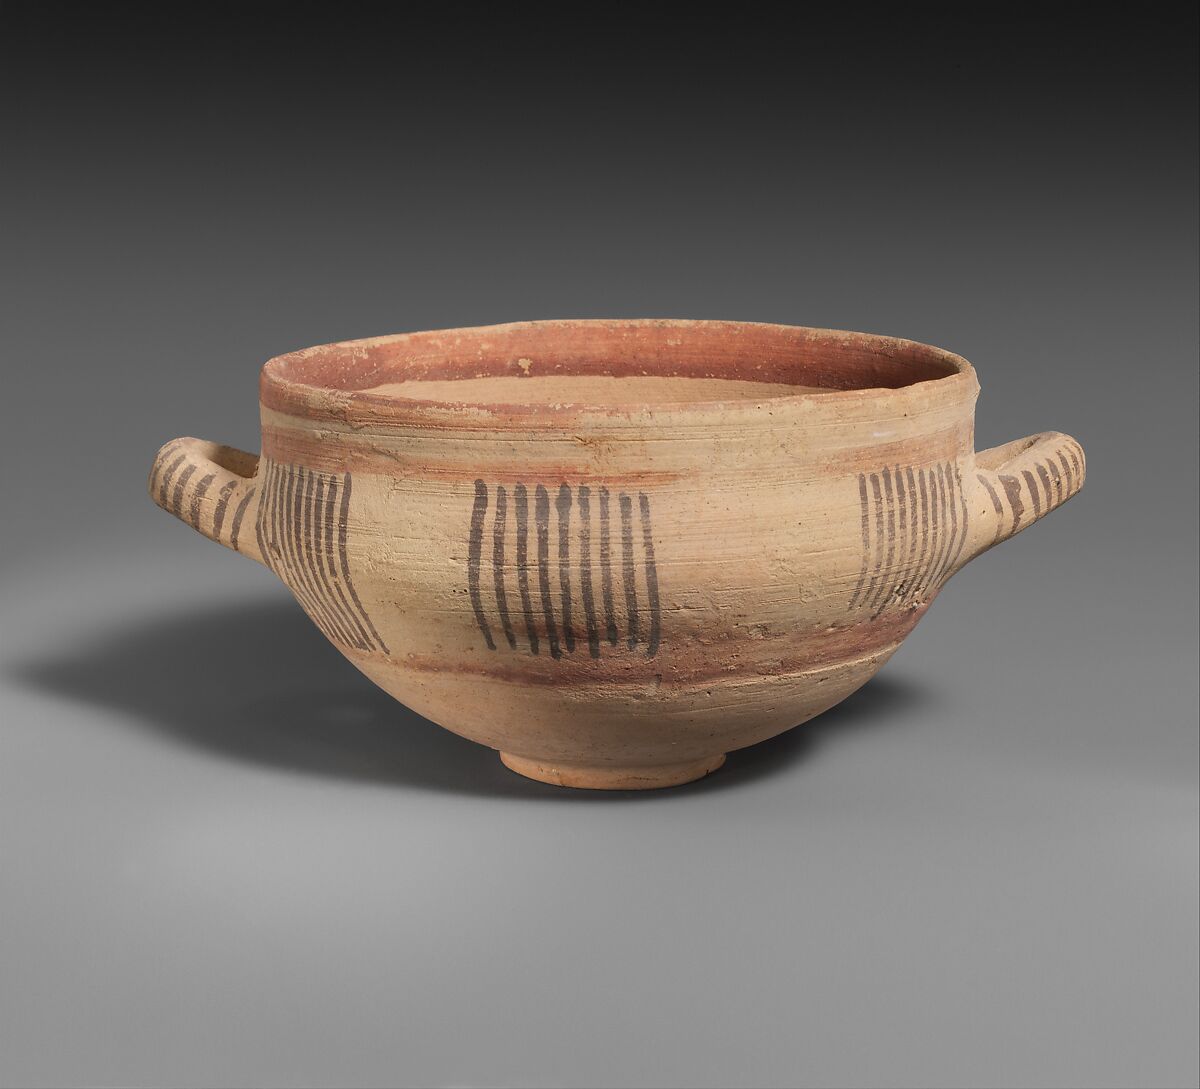 Terracotta skyphos (deep drinking cup), Terracotta, Euboean or Cypriot 